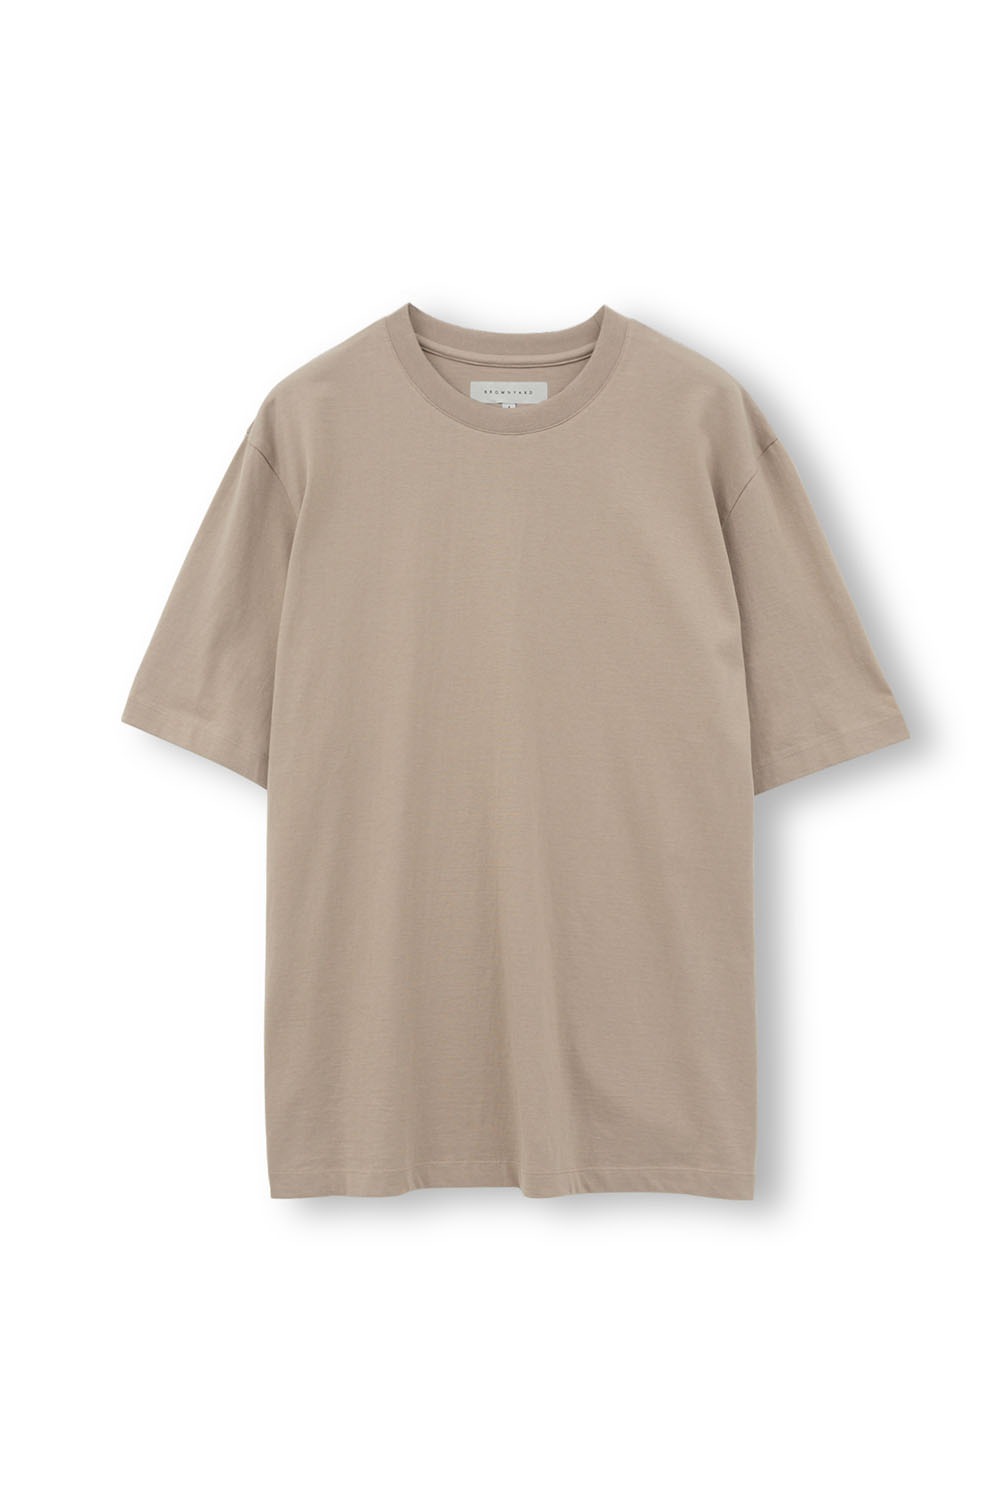 Essential T Shirt-Beige